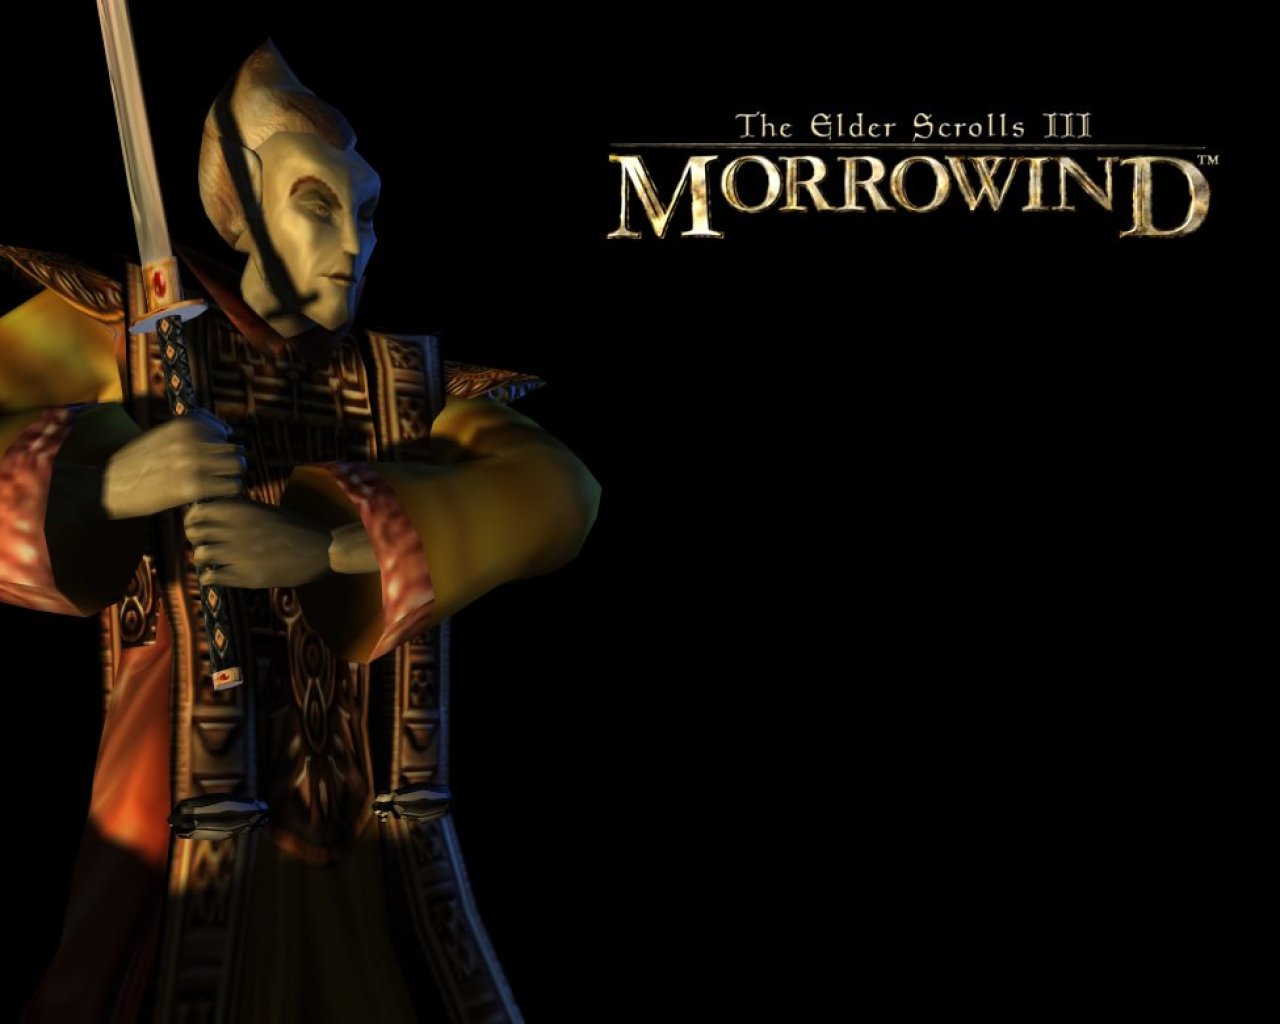 Wallpaper The Elder Scrolls III: Morrowind "Protection"